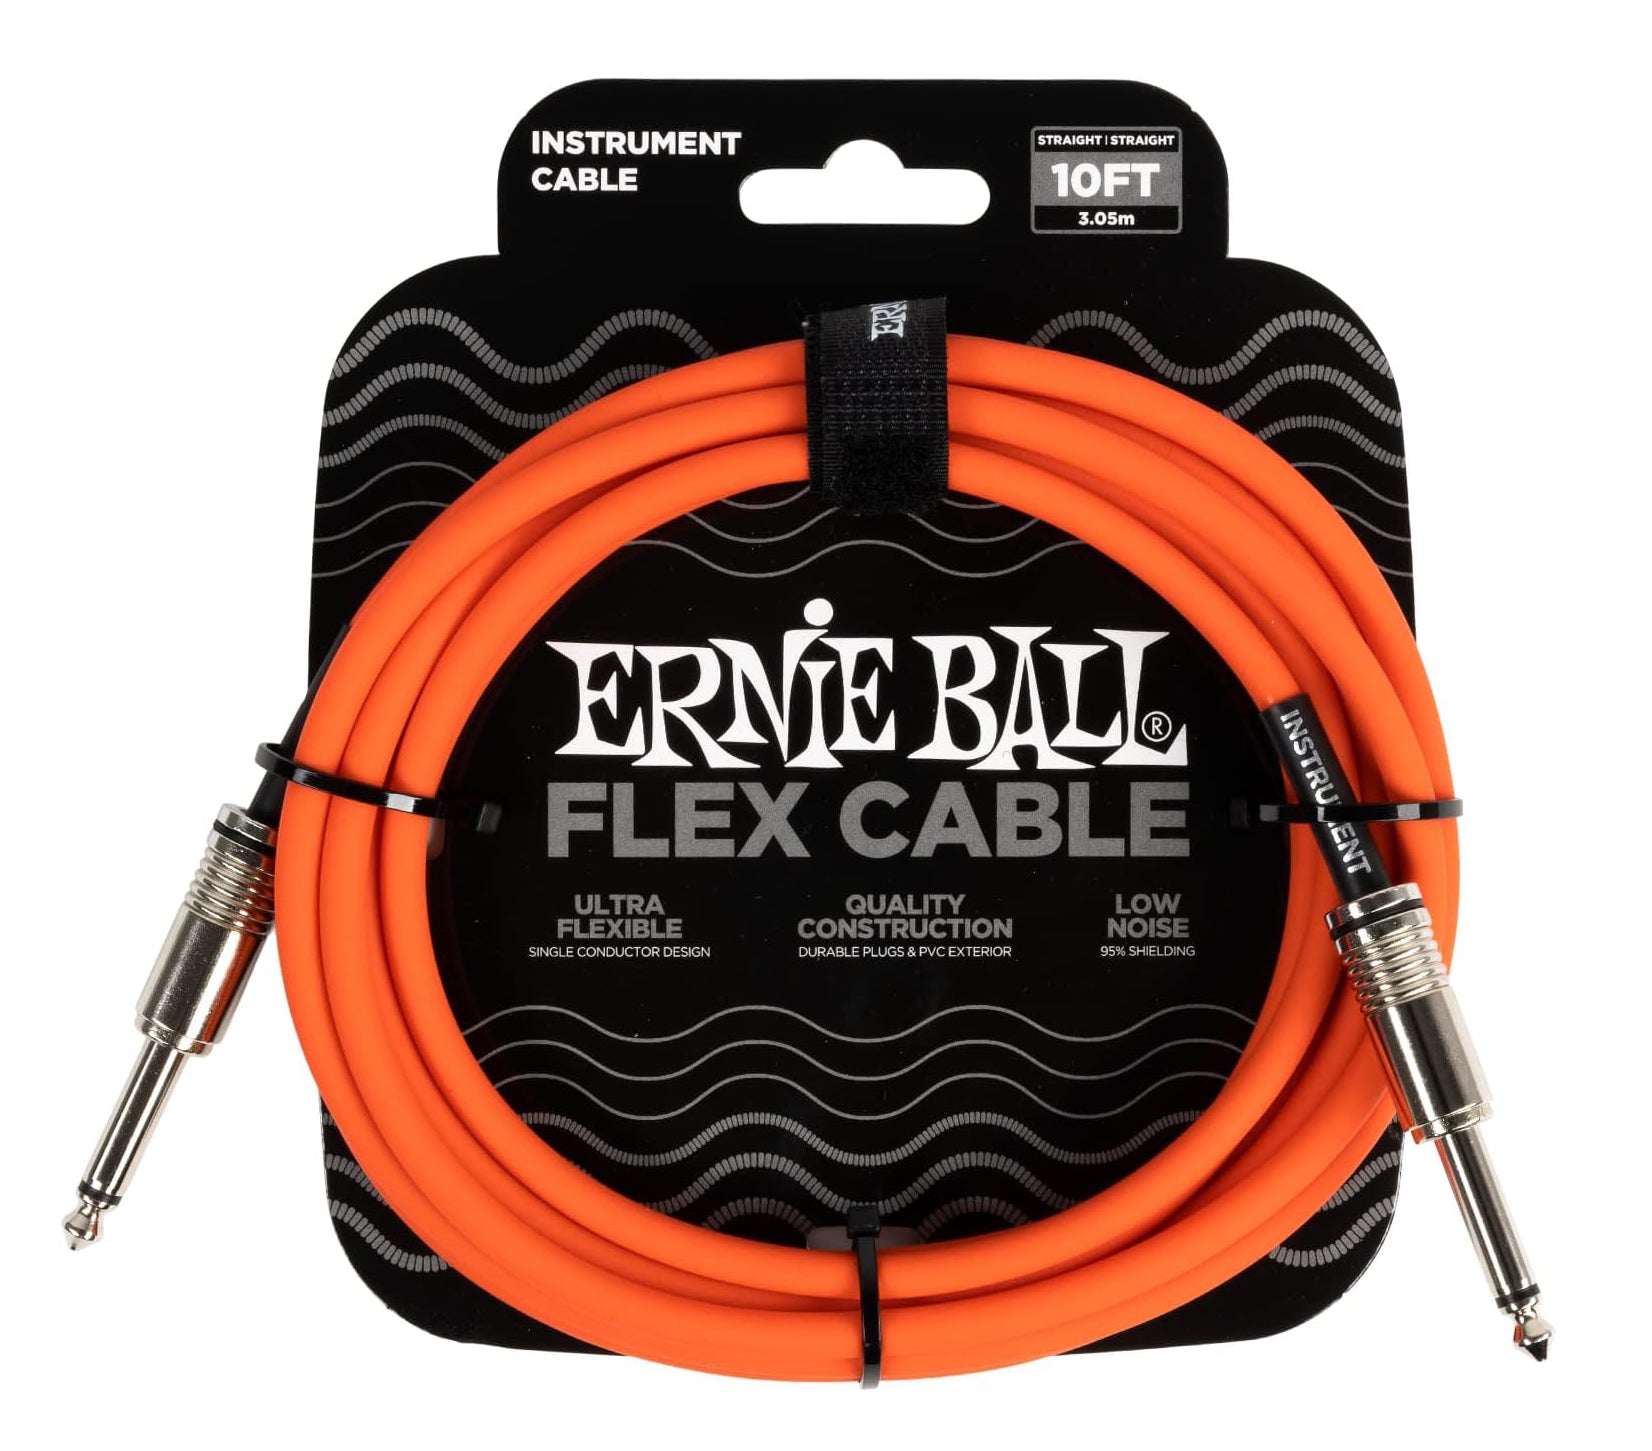 Ernie Ball Flex Instrument Cable Straight/Straight 10Ft. - Orange Finish